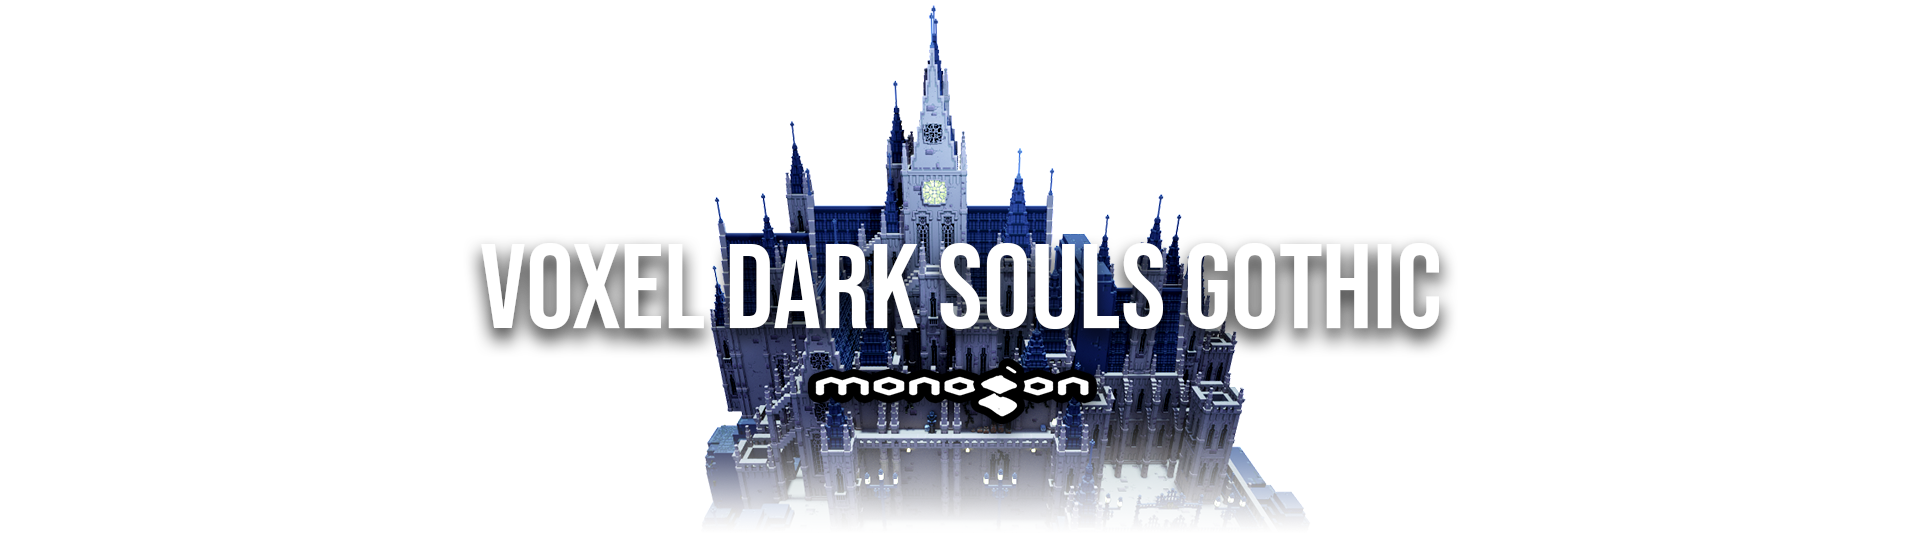 Voxel Dark Souls Gothic - monogon